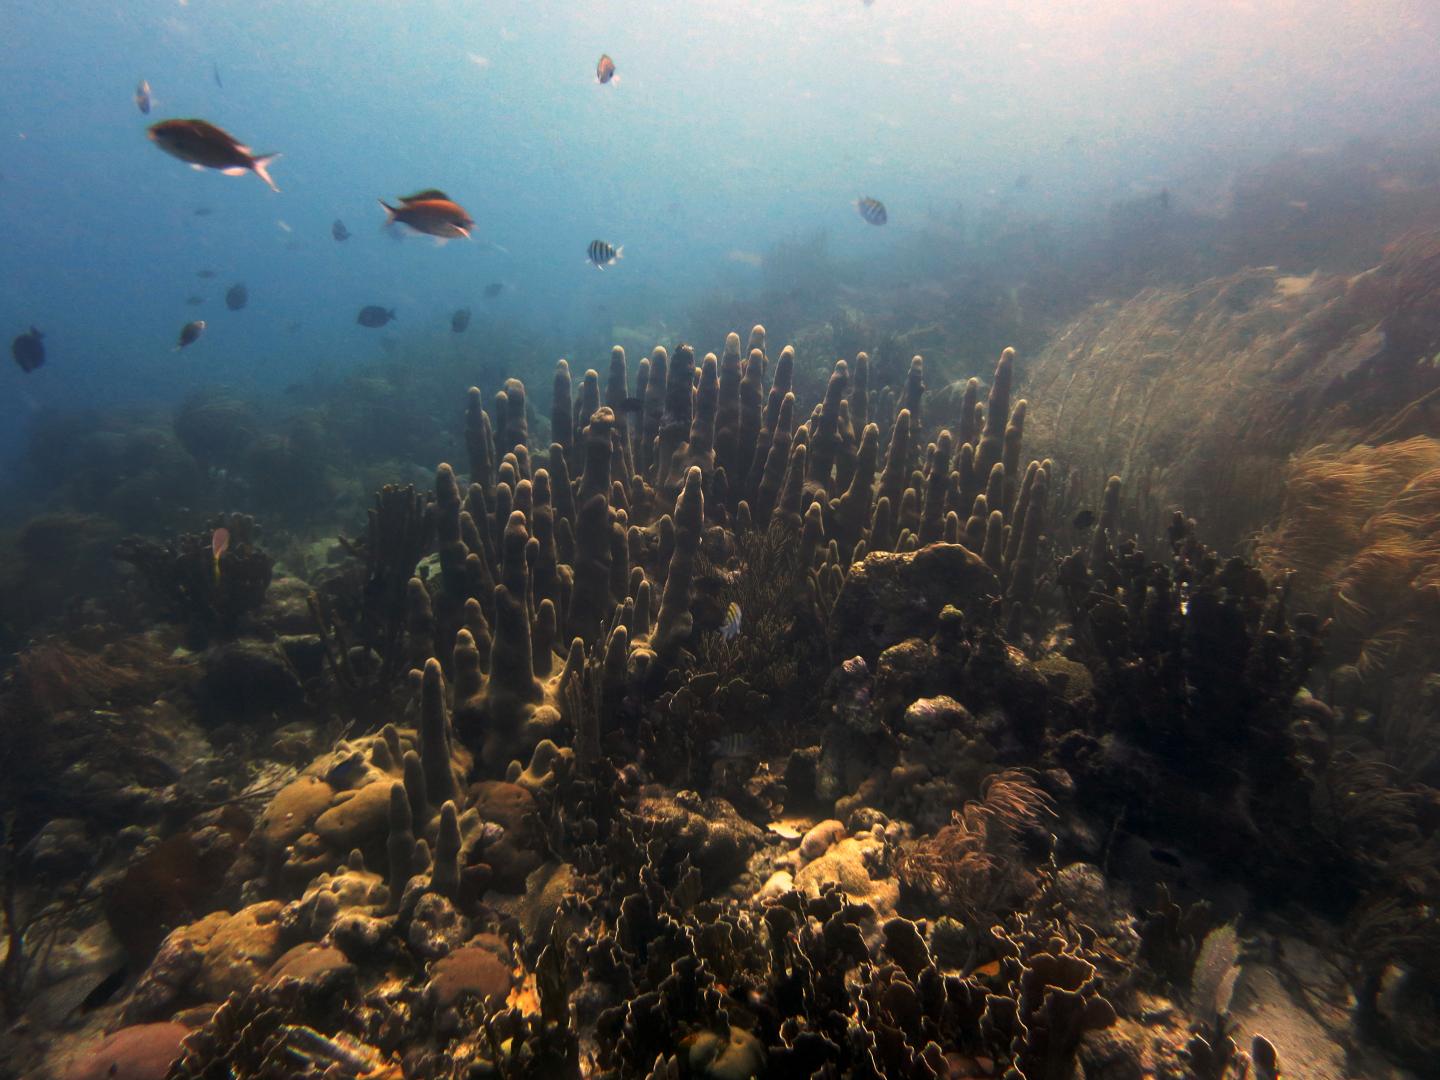 Pillar Coral